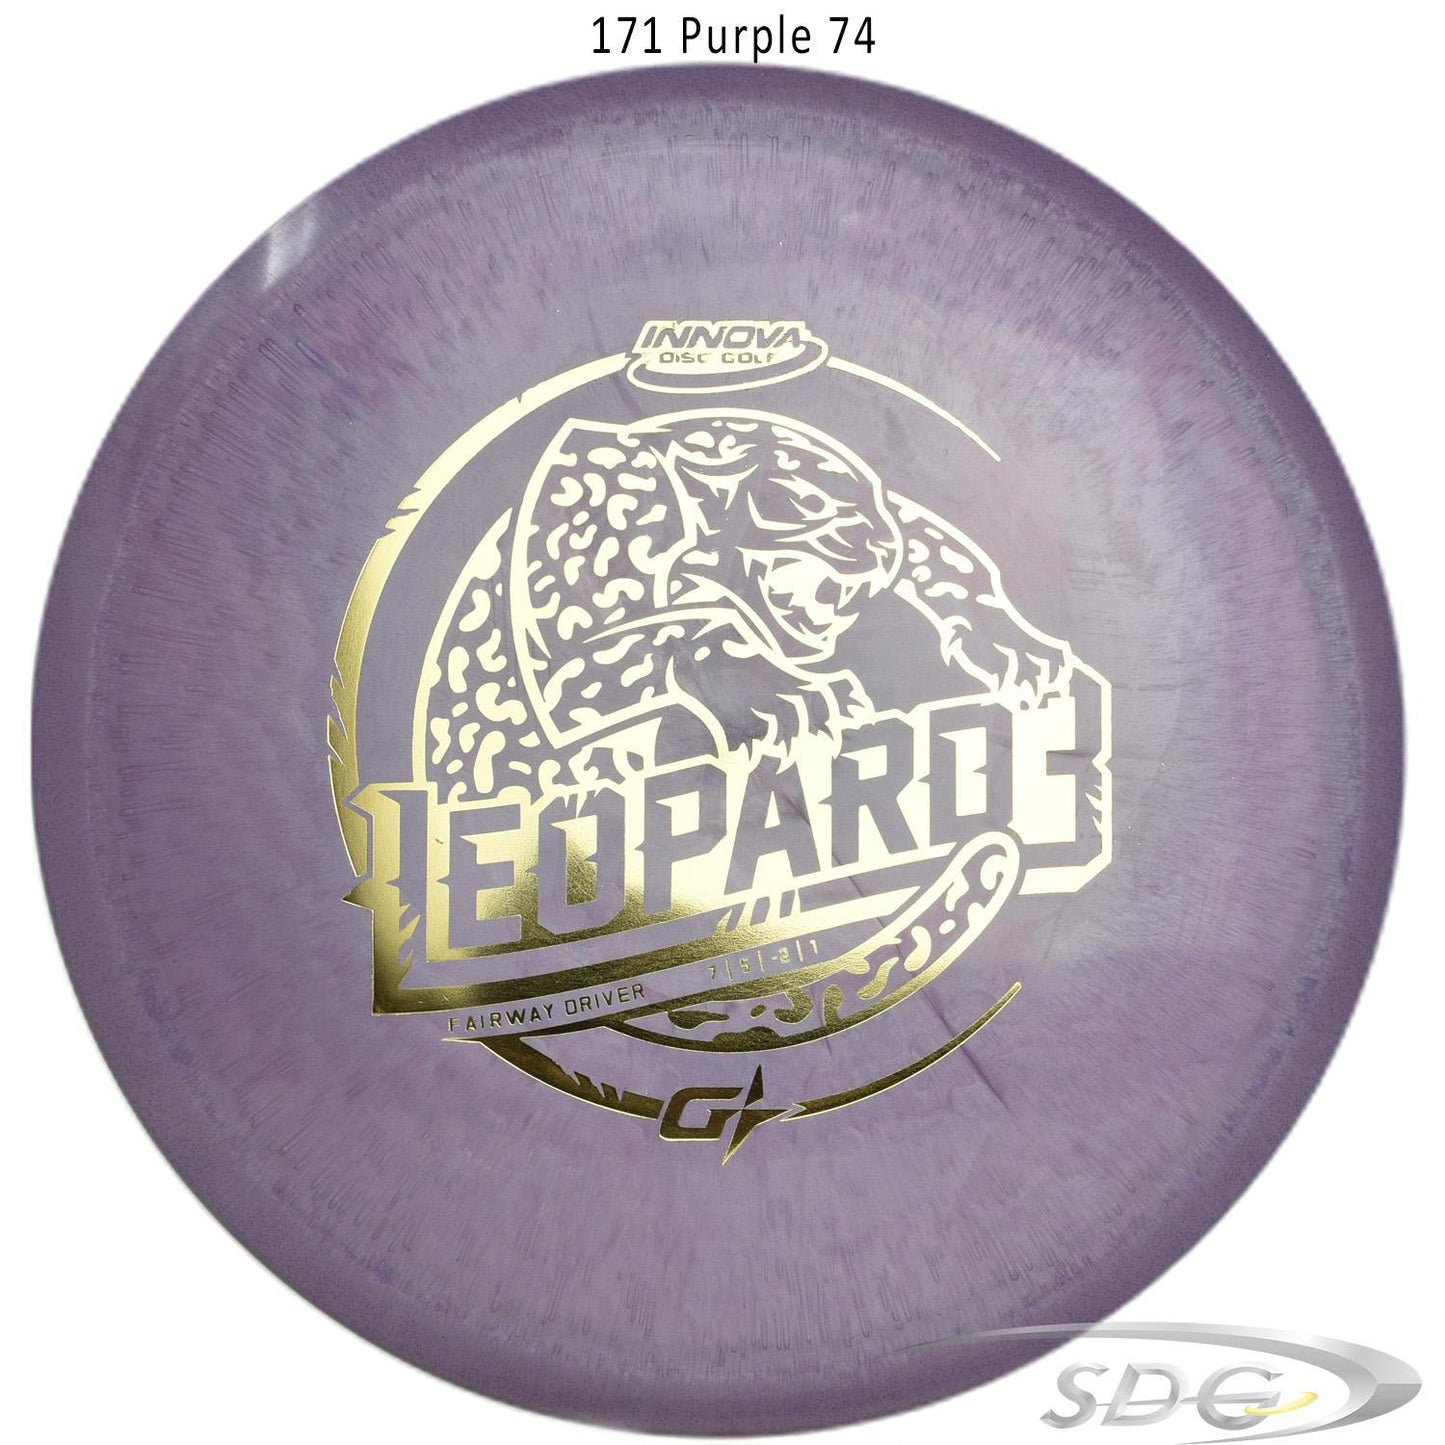 innova-gstar-leopard3-disc-golf-fairway-driver 171 Purple 74 